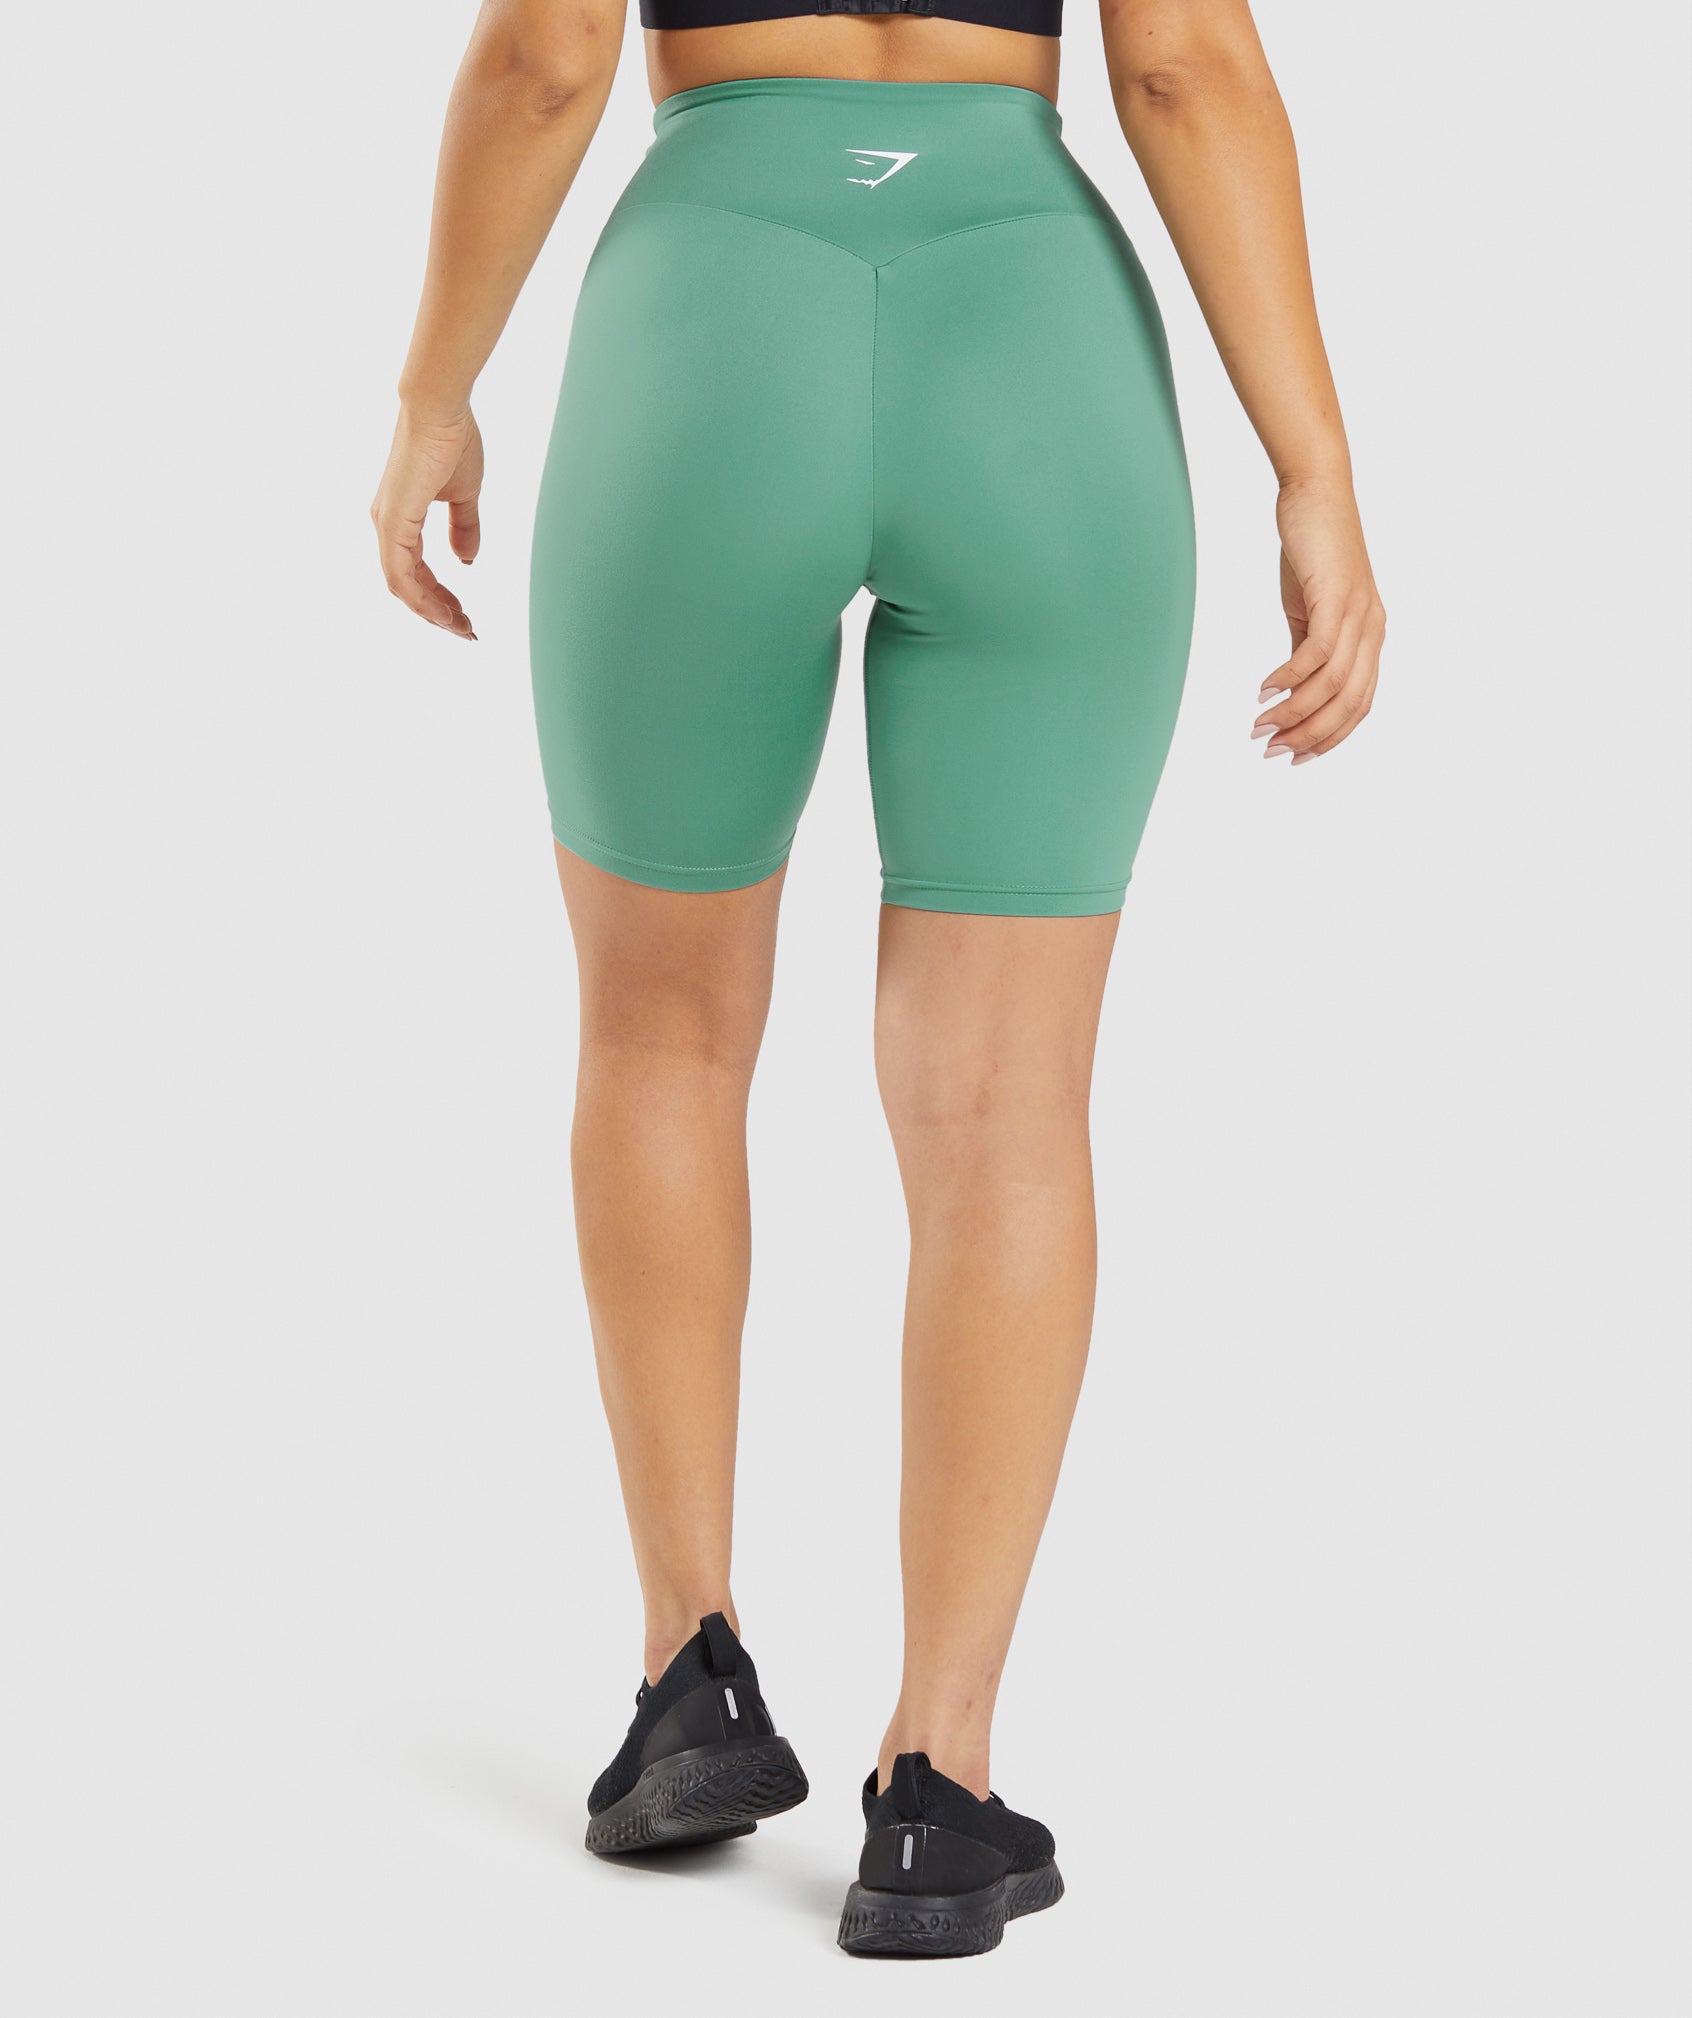 Green Mermaid Shorts Biking Running Women Workout Sports Athletic